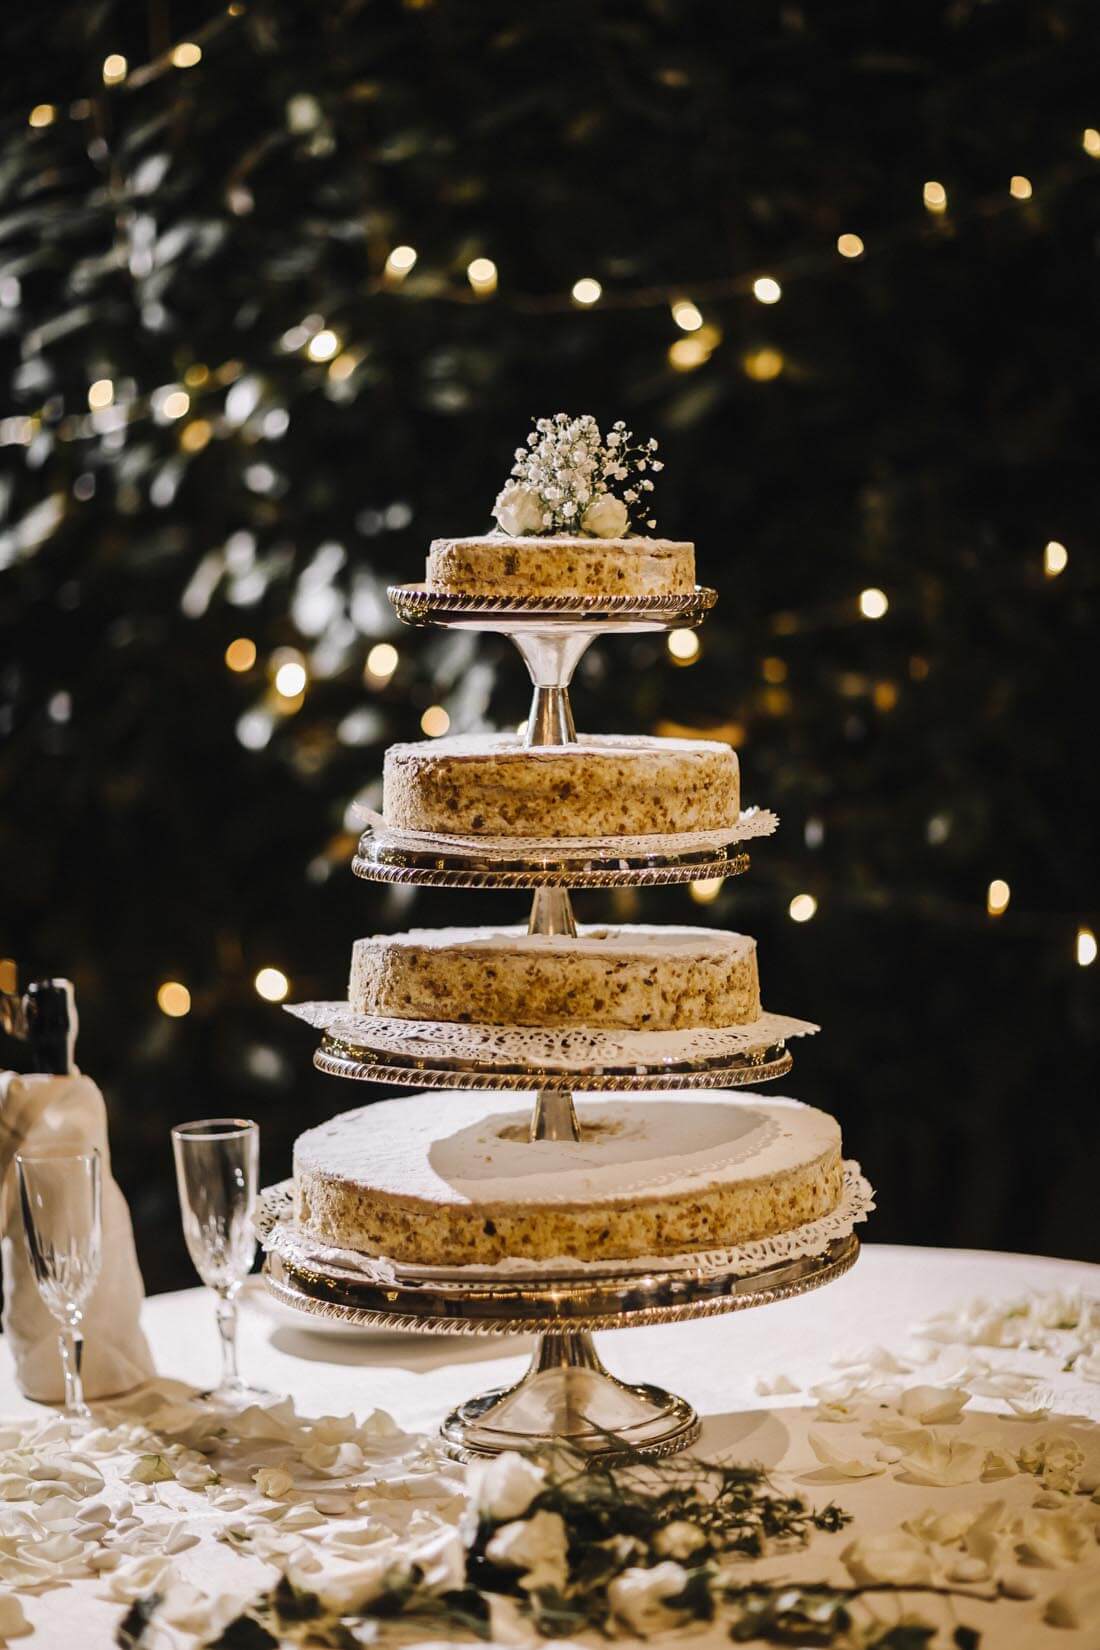 The beautiful wedding cake